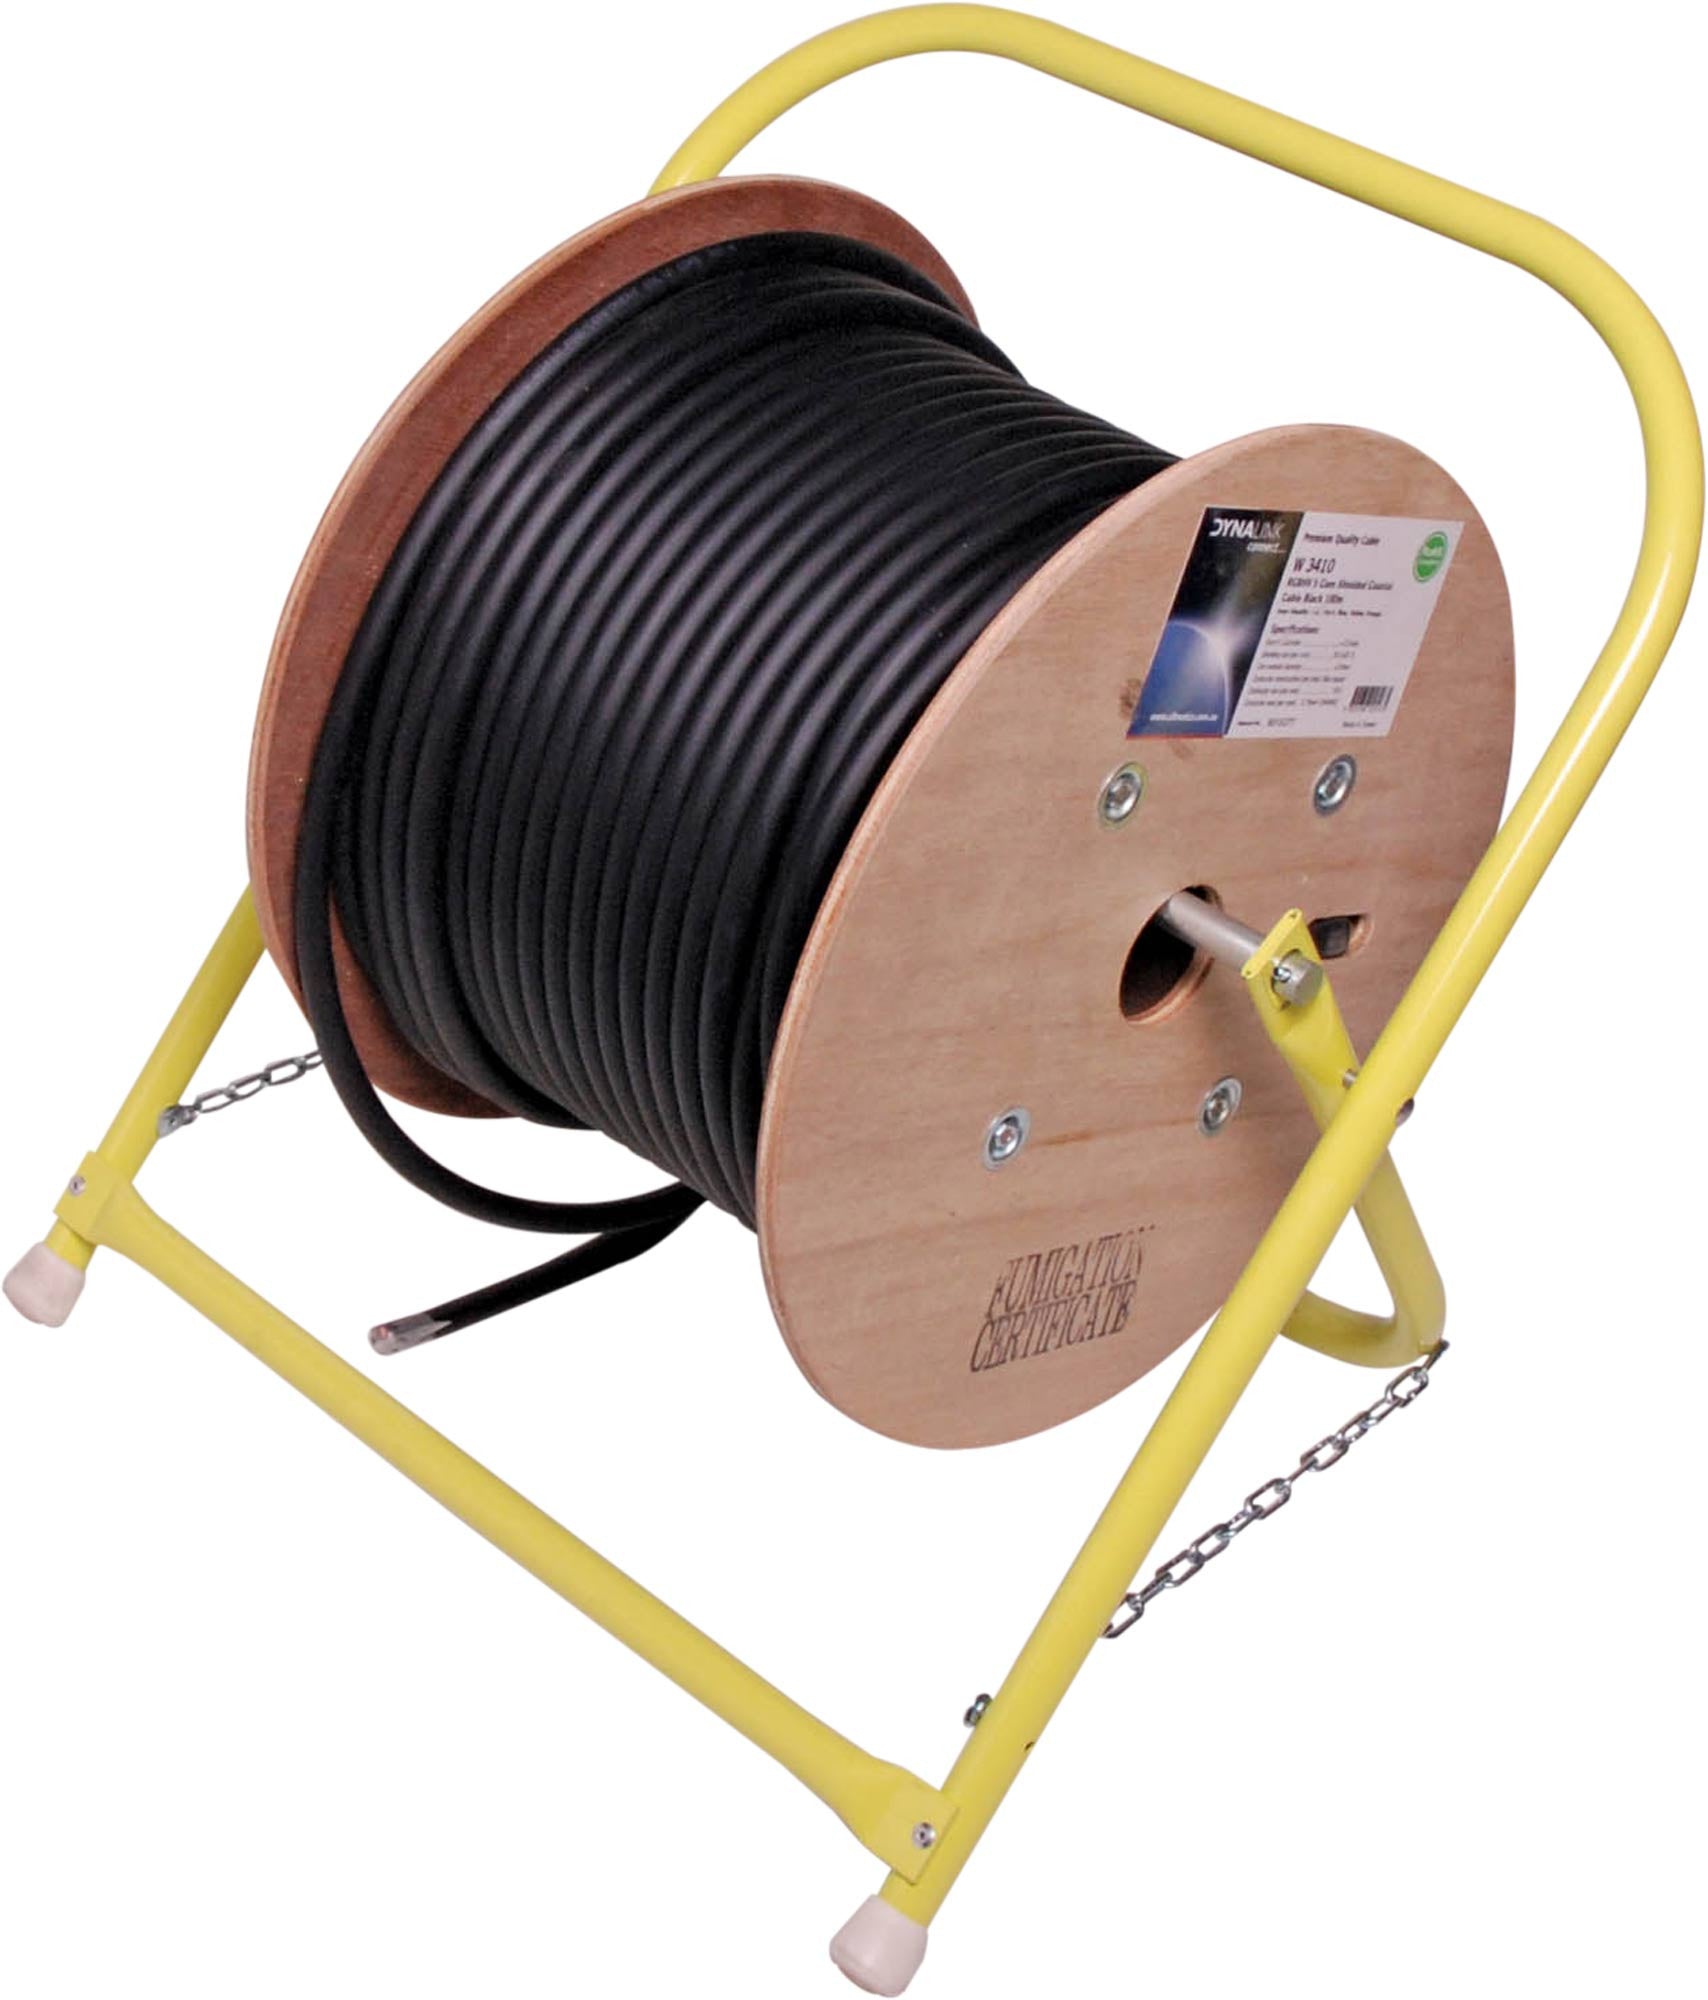 BNR Portable Cable Reeler Stand - BNR Industrial